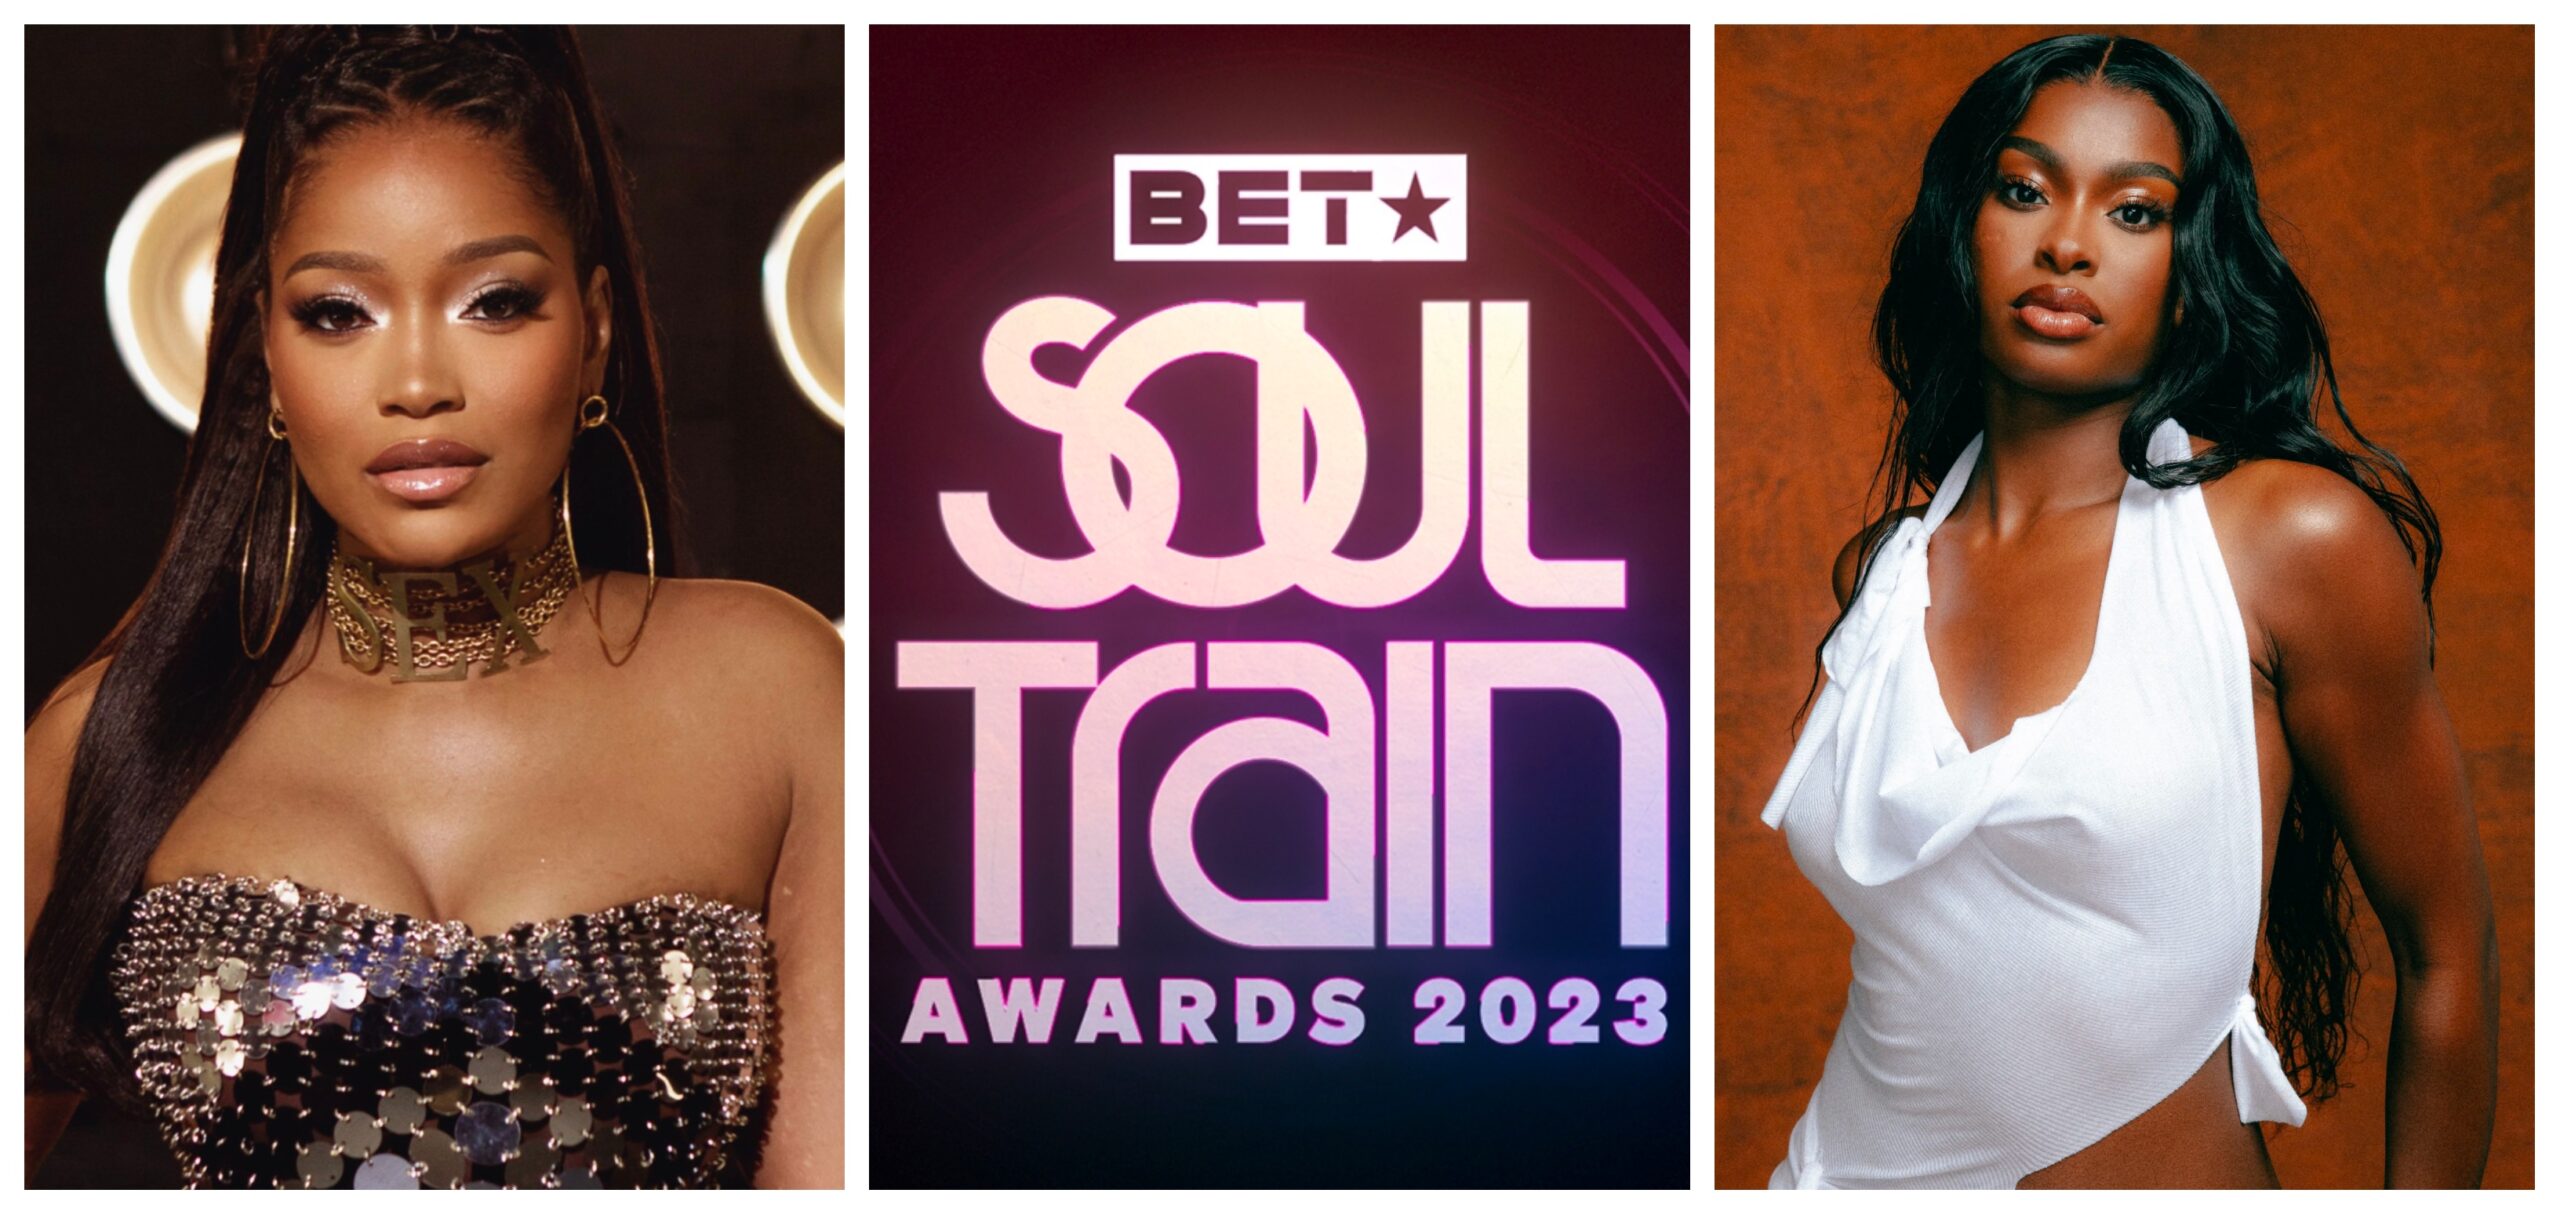 Soul Train Awards 2023: Keke Palmer to Host / Coco Jones, SWV, Muni Long, & More to Perform